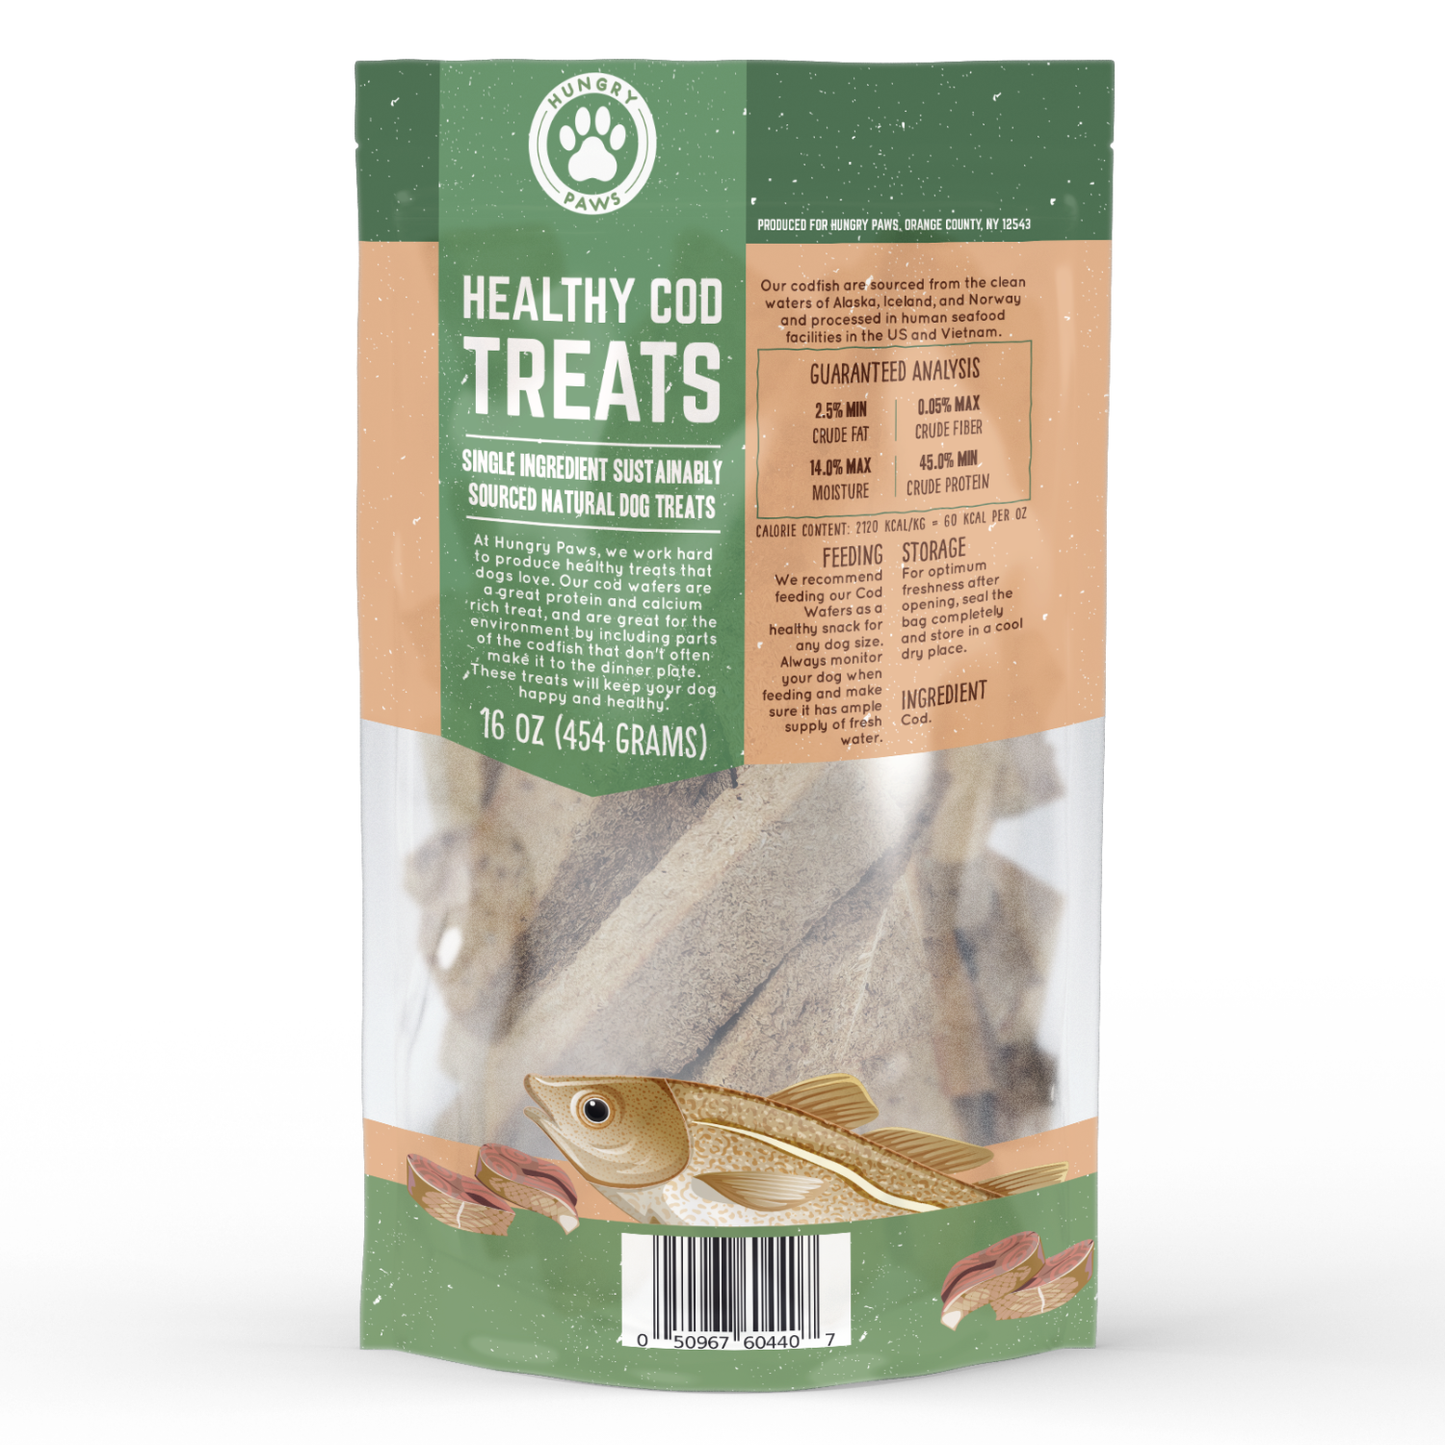 Cod Fish Wafer Dog Treats - Single Ingredient Snacks 16-oz